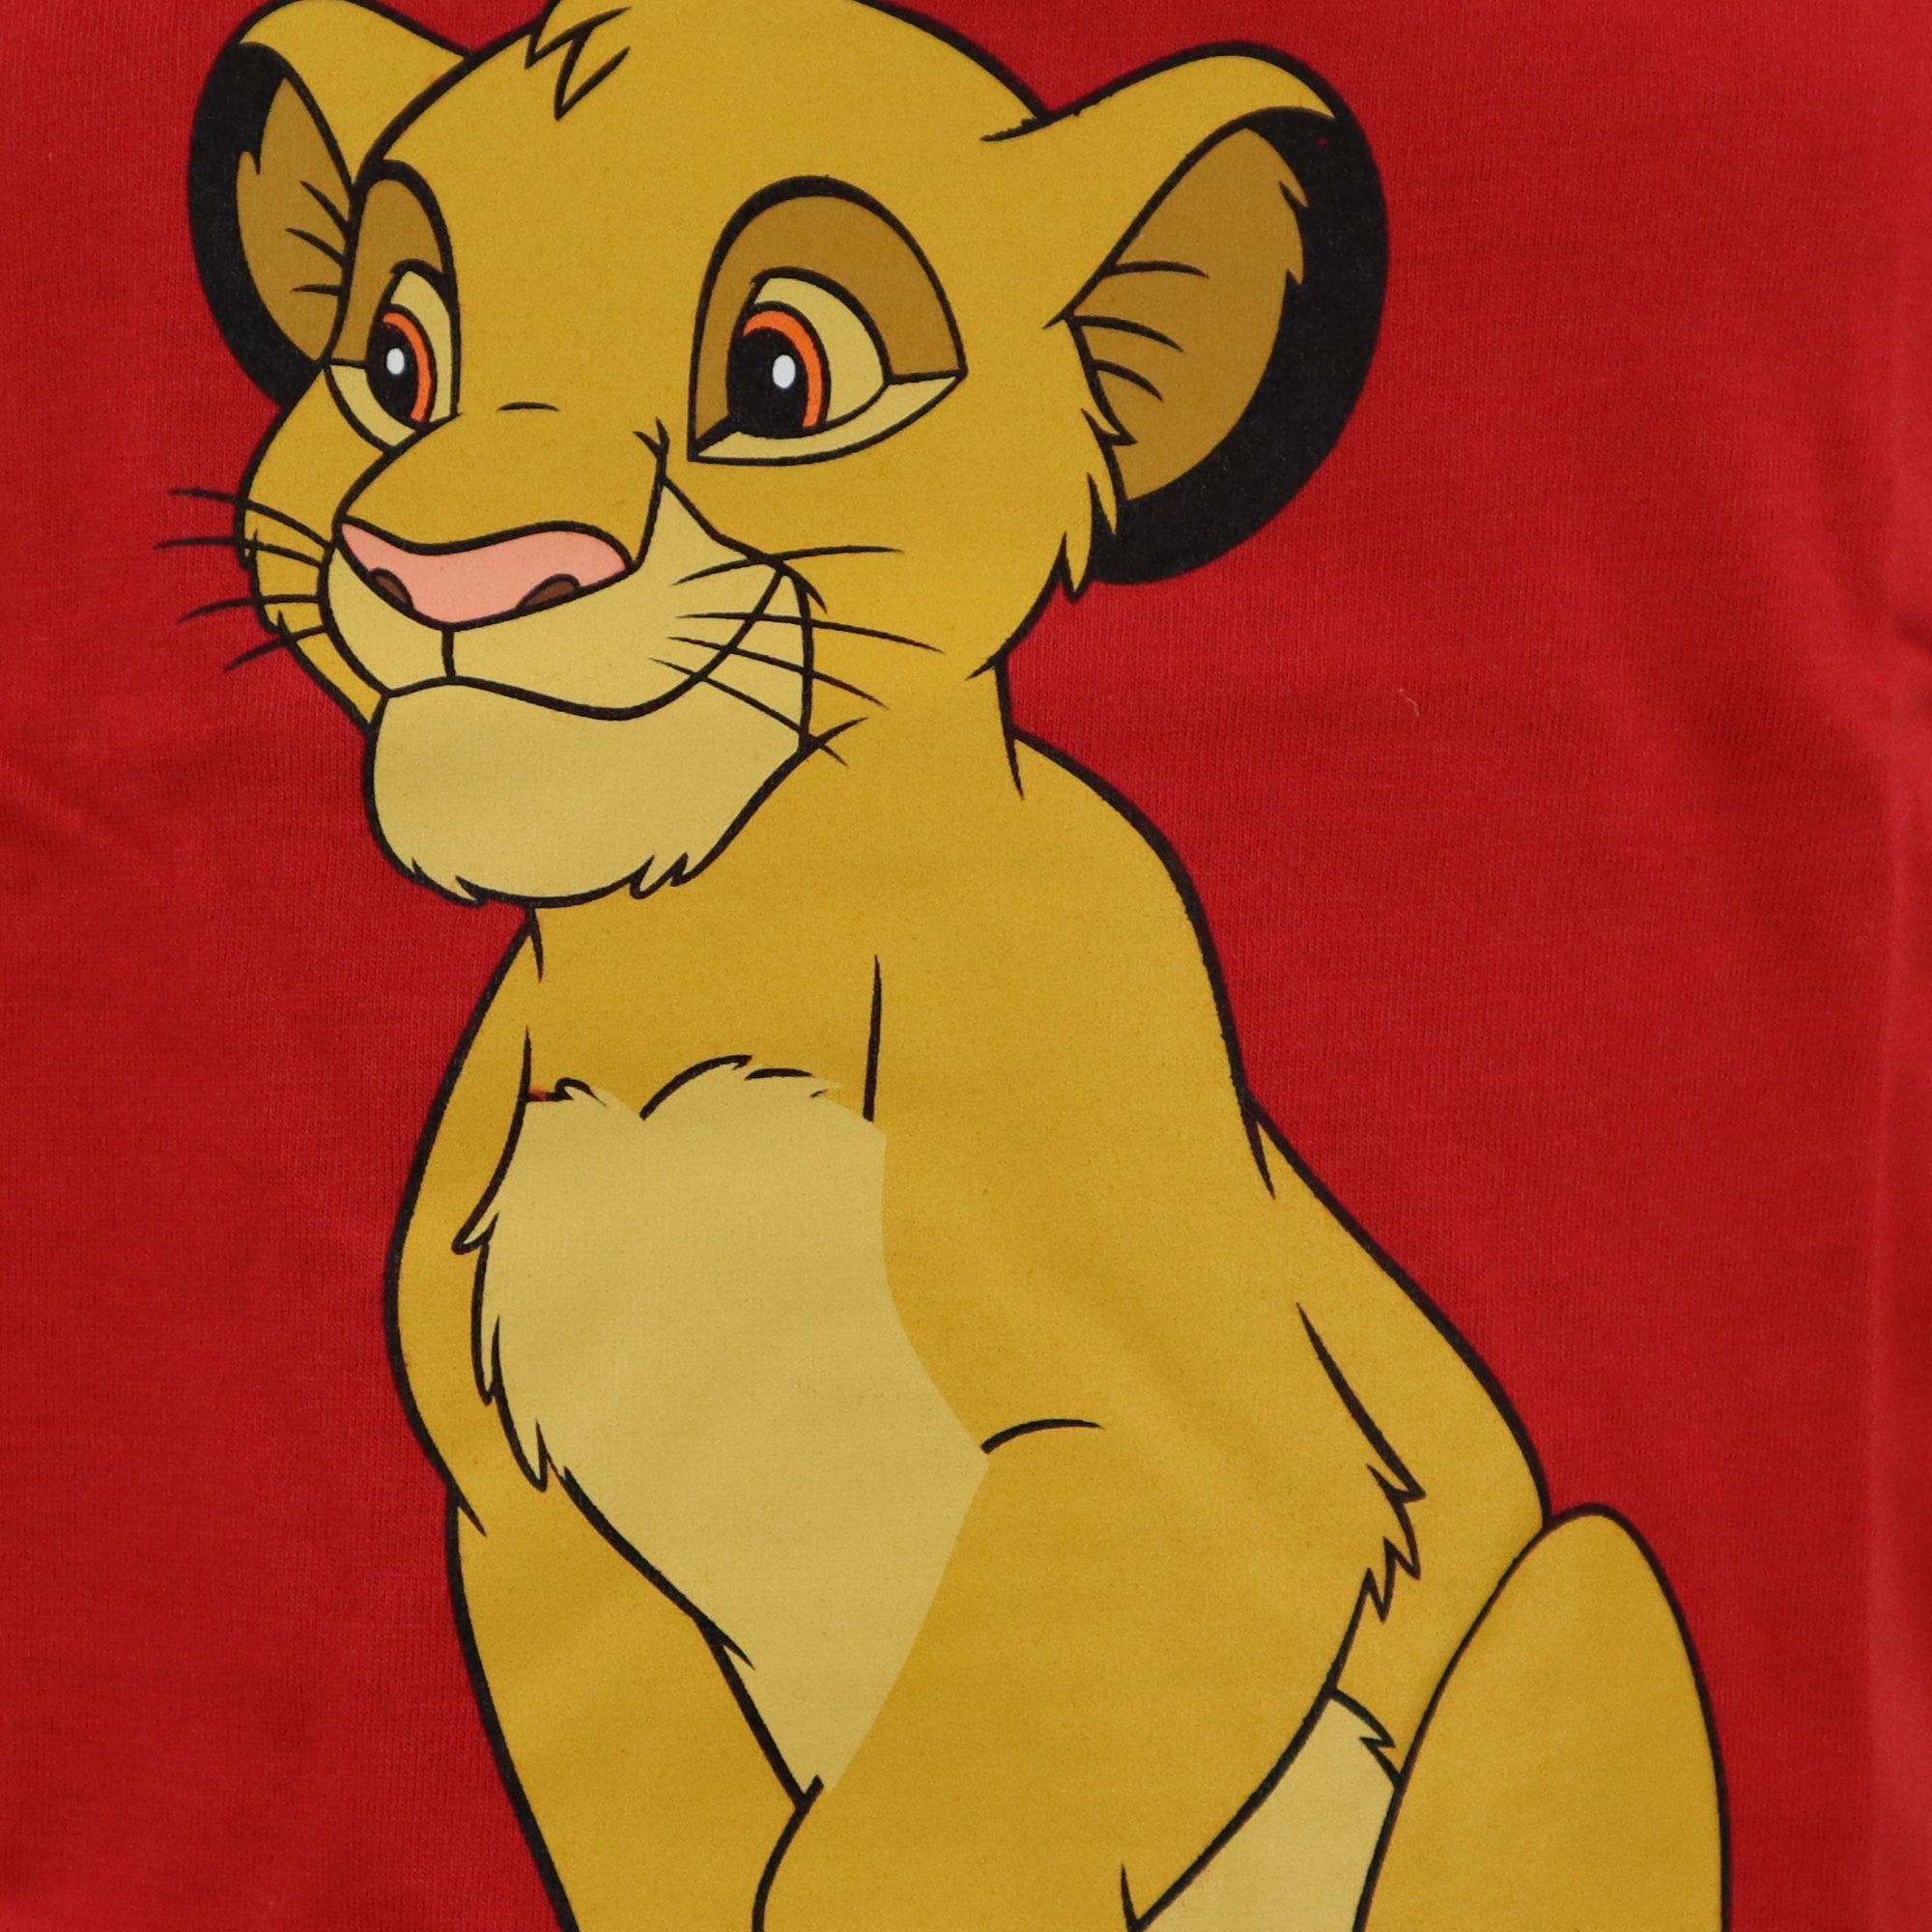 Löwen Lion Print-Shirt 98 Disney T-Shirt King Gr. König Baumwolle Rot bis The kurzarm Simba Disney Kinder 100% 128,